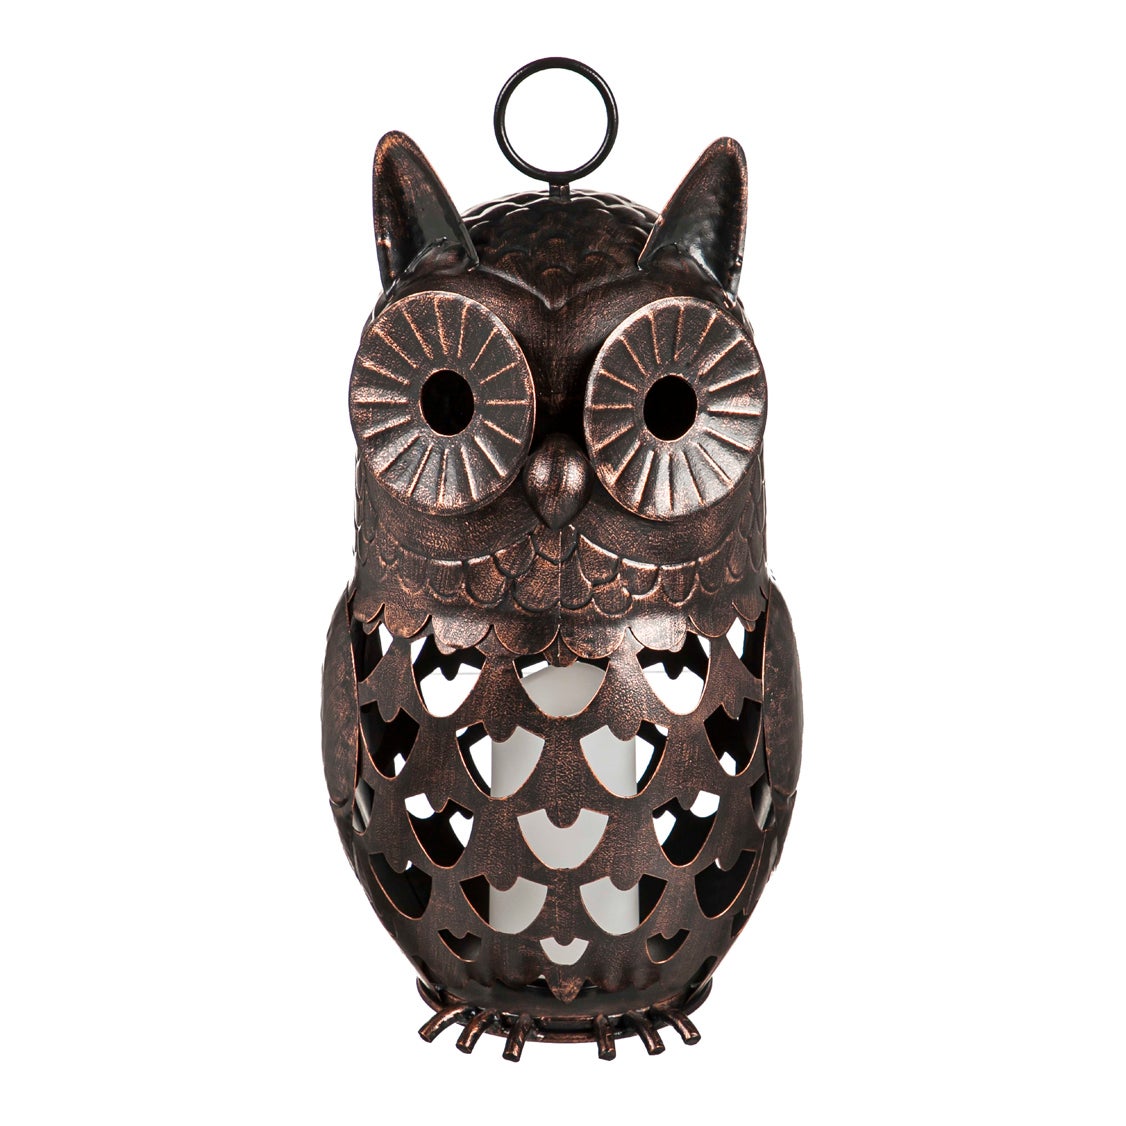 18"H LED Owl Decor